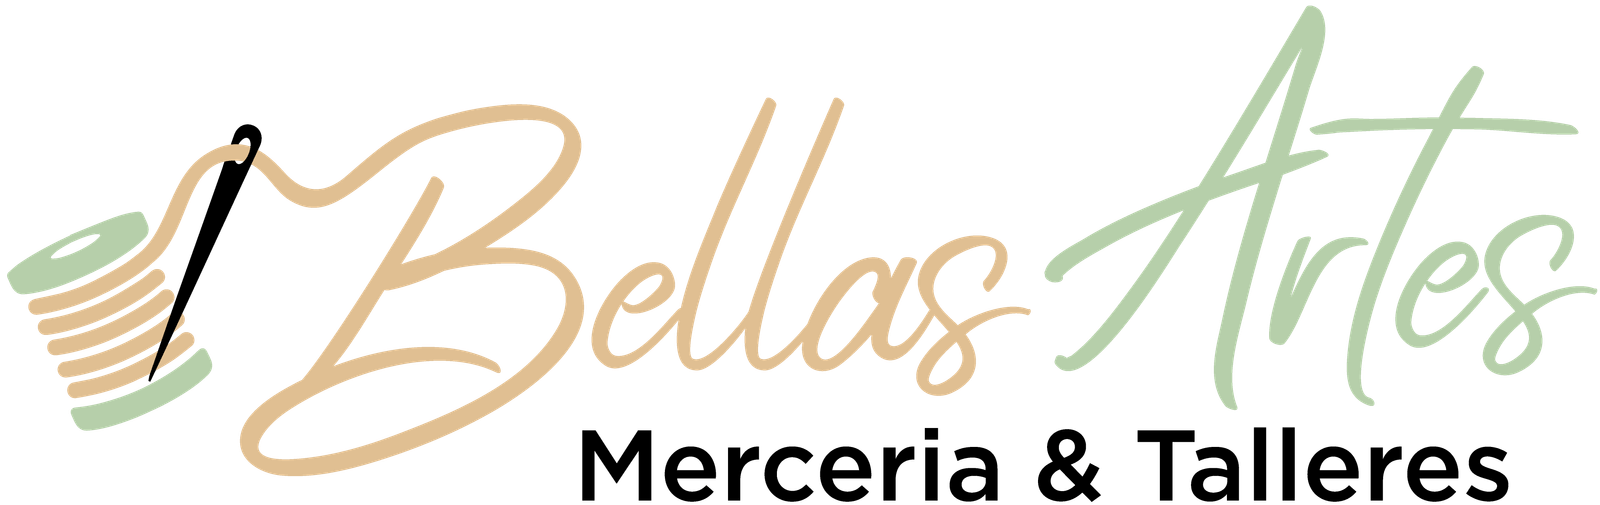 Merceria Bellas Artes